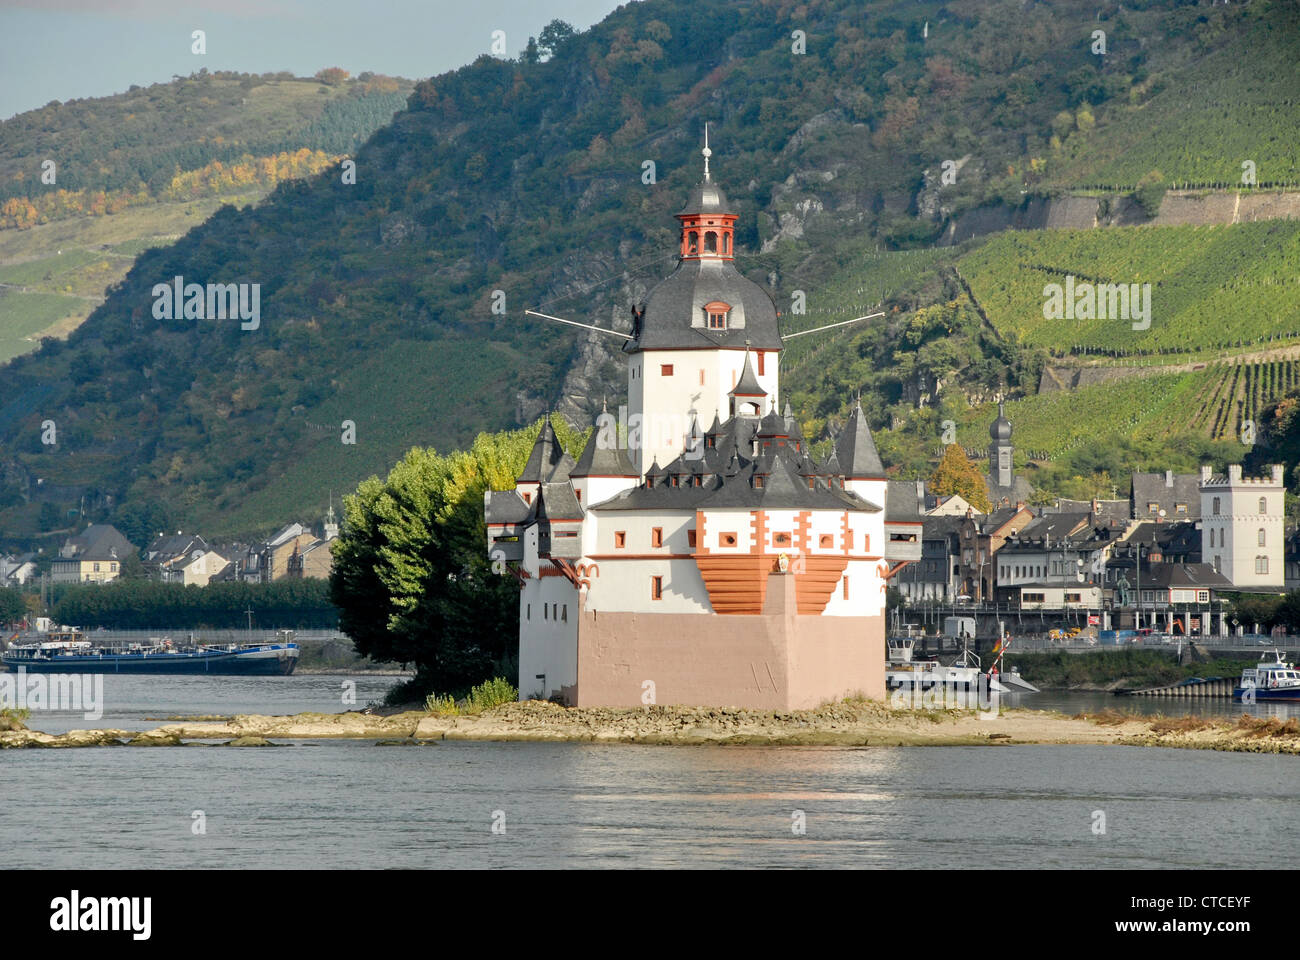 Pfalz (Pfalzgrafenstein) Castle Toll Station on the Rhine River in the Rhine Gorge, Germany Stock Photo